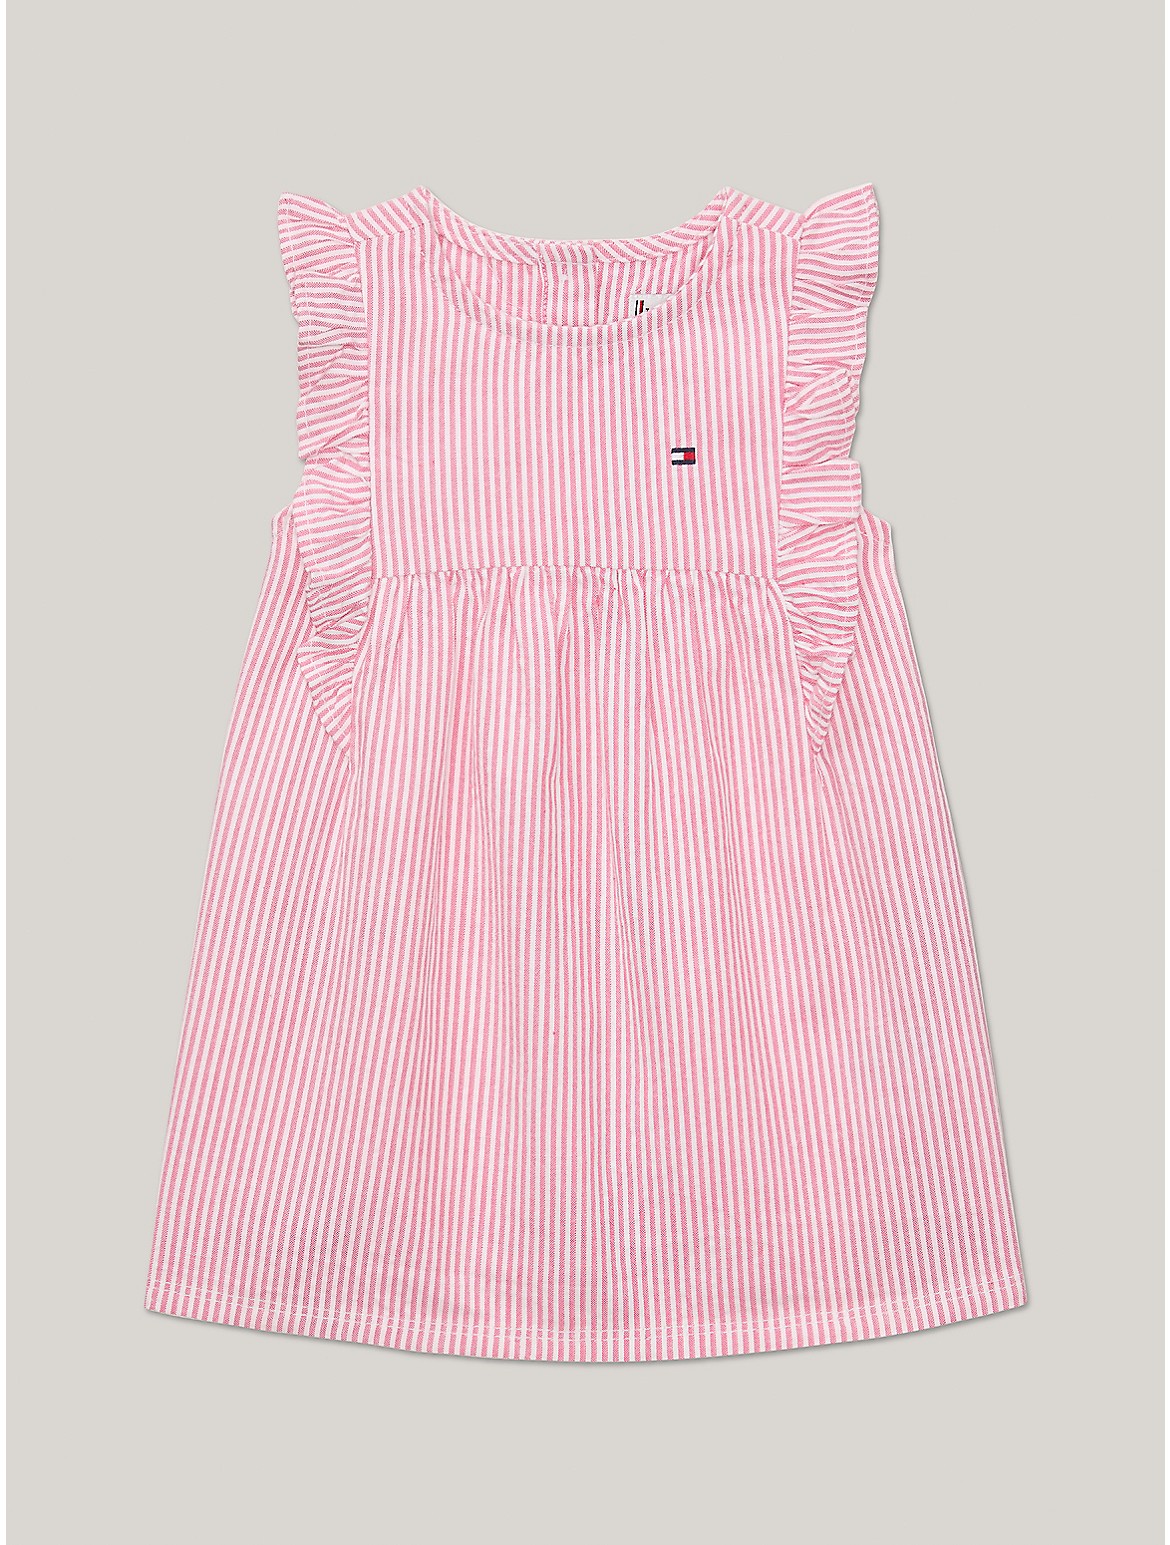 Tommy Hilfiger Girls' Babies' Stripe Dress